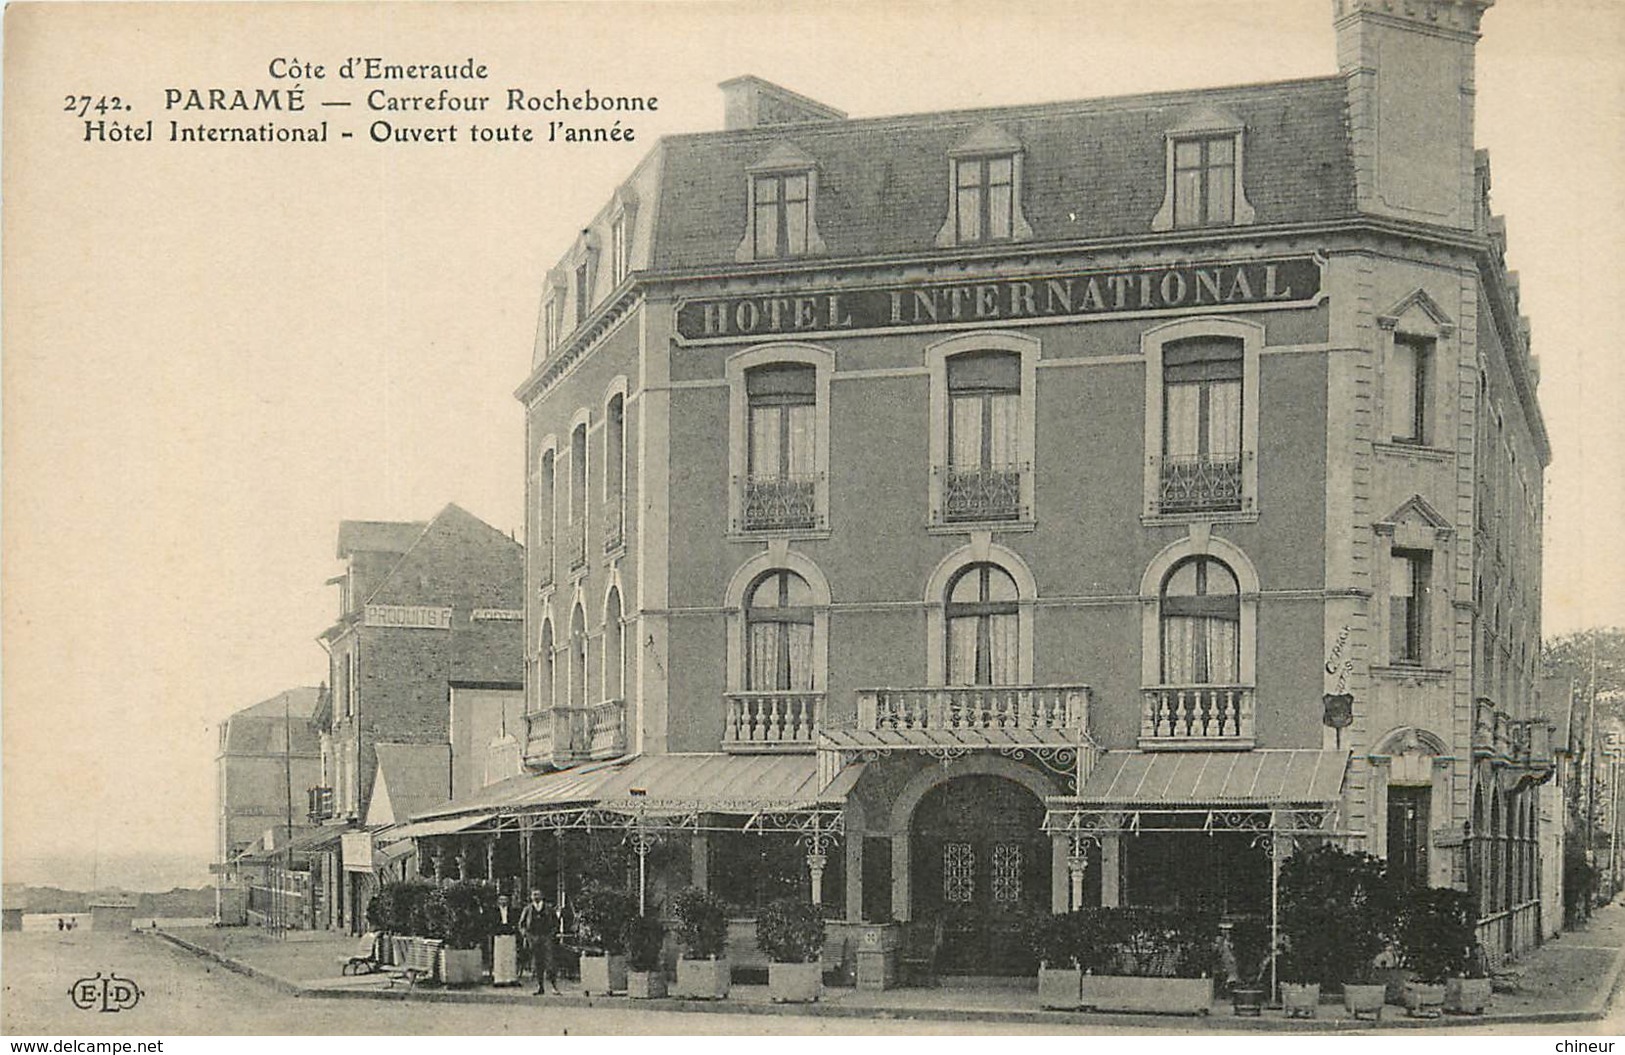 PARAME CARREFOUR ROCHEBONNE HOTEL INTERNATIONAL OUVERT TOUTE L'ANNEE - Parame